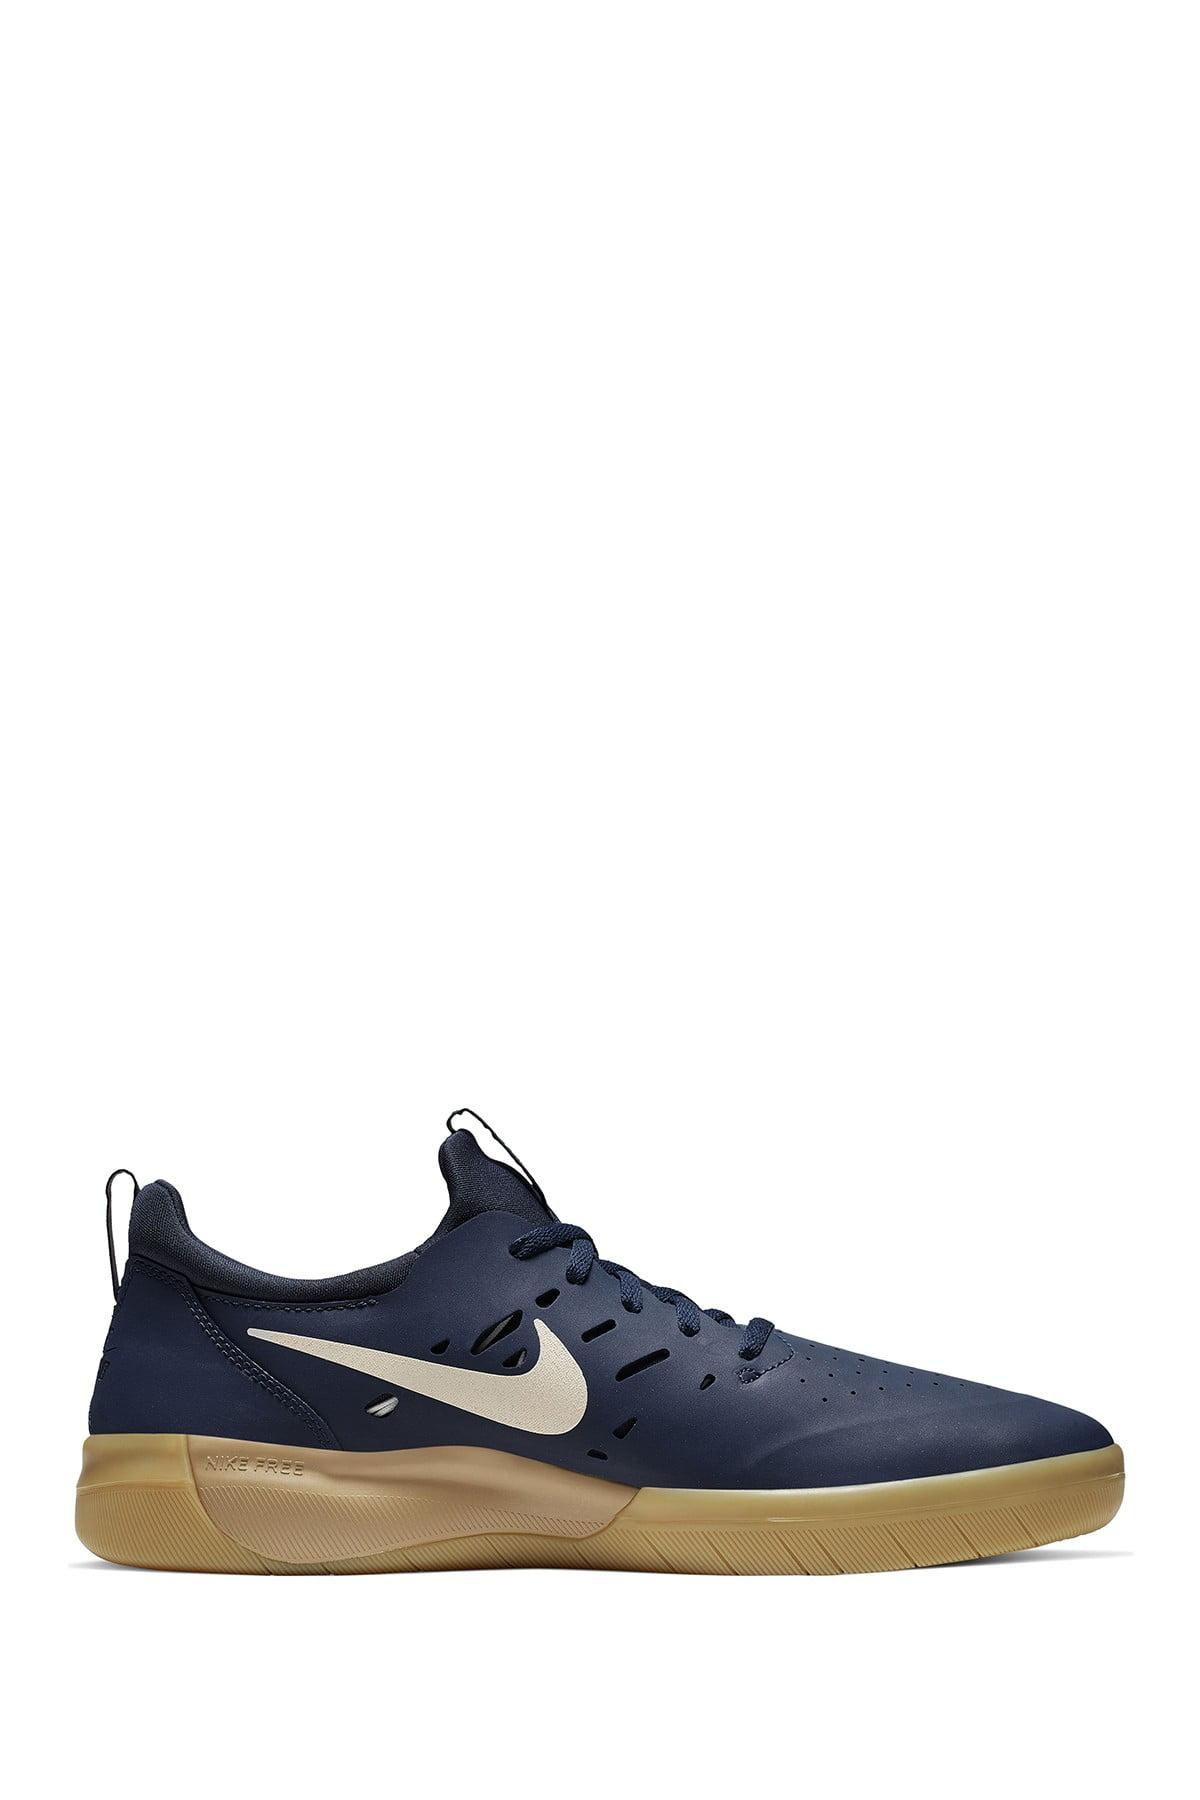 Nike Sb Nyjah Free Skate Shoe in Blue for Lyst